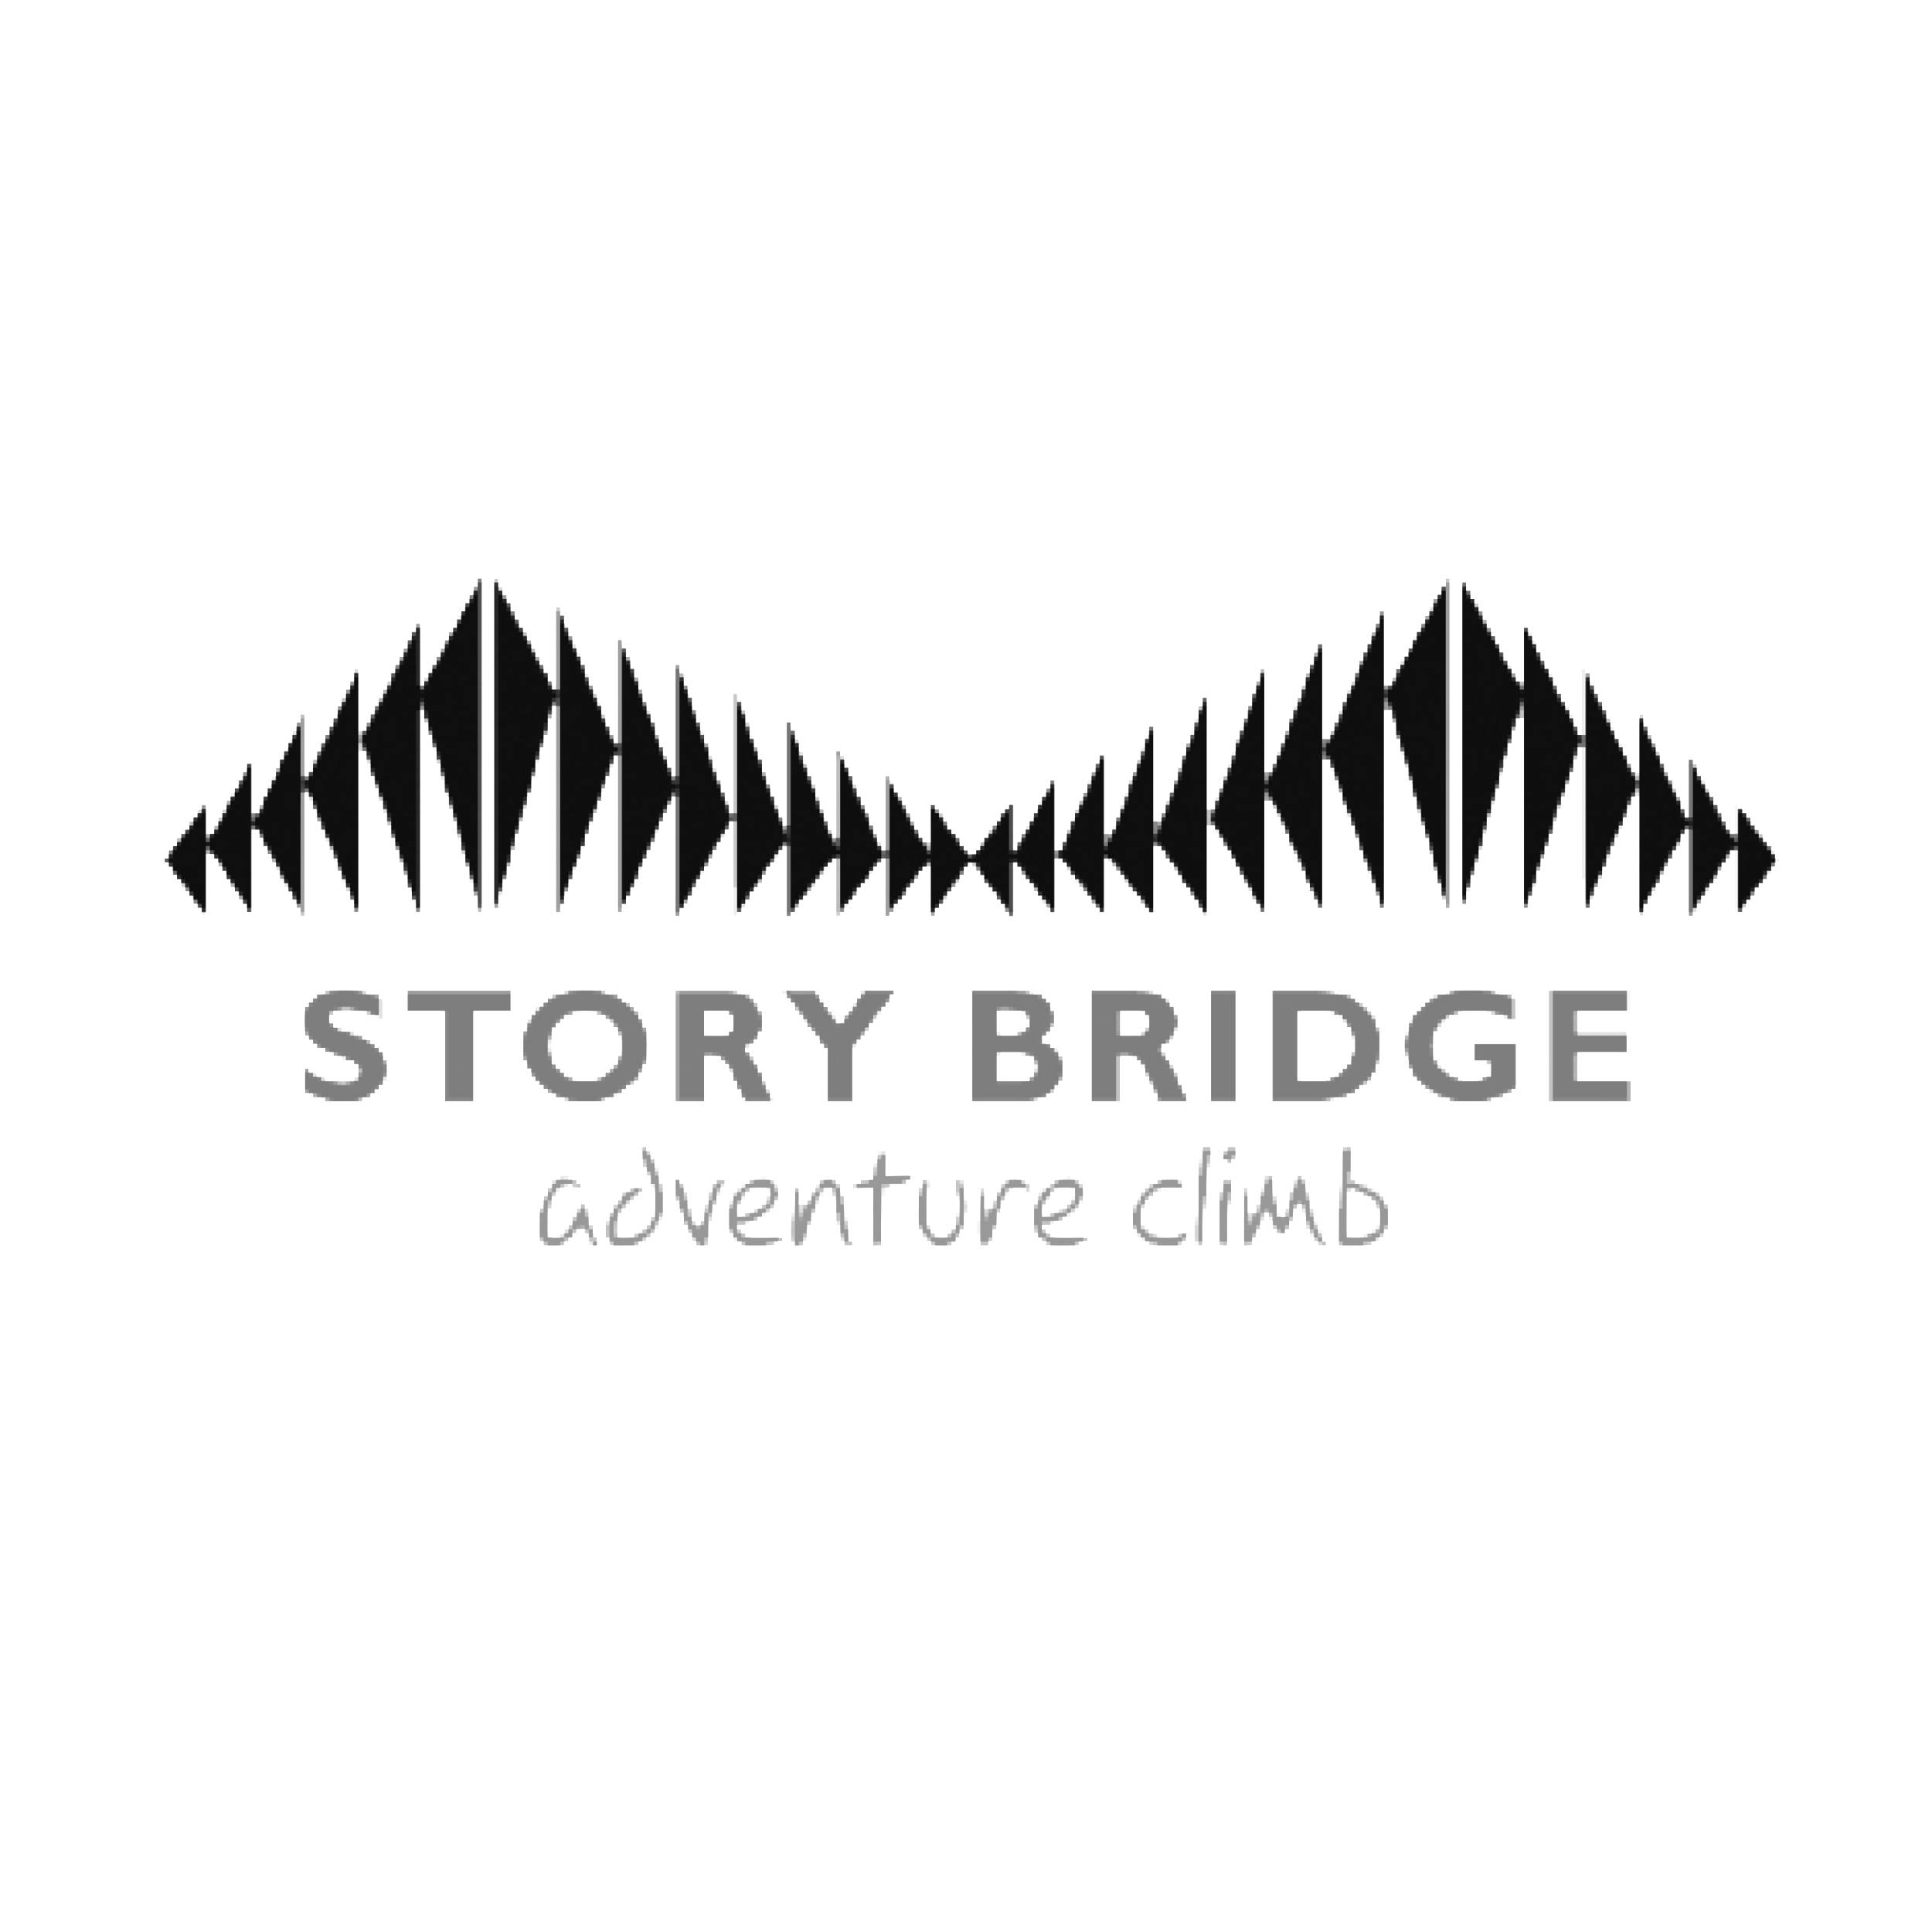 Story Bridge Adventure Climb